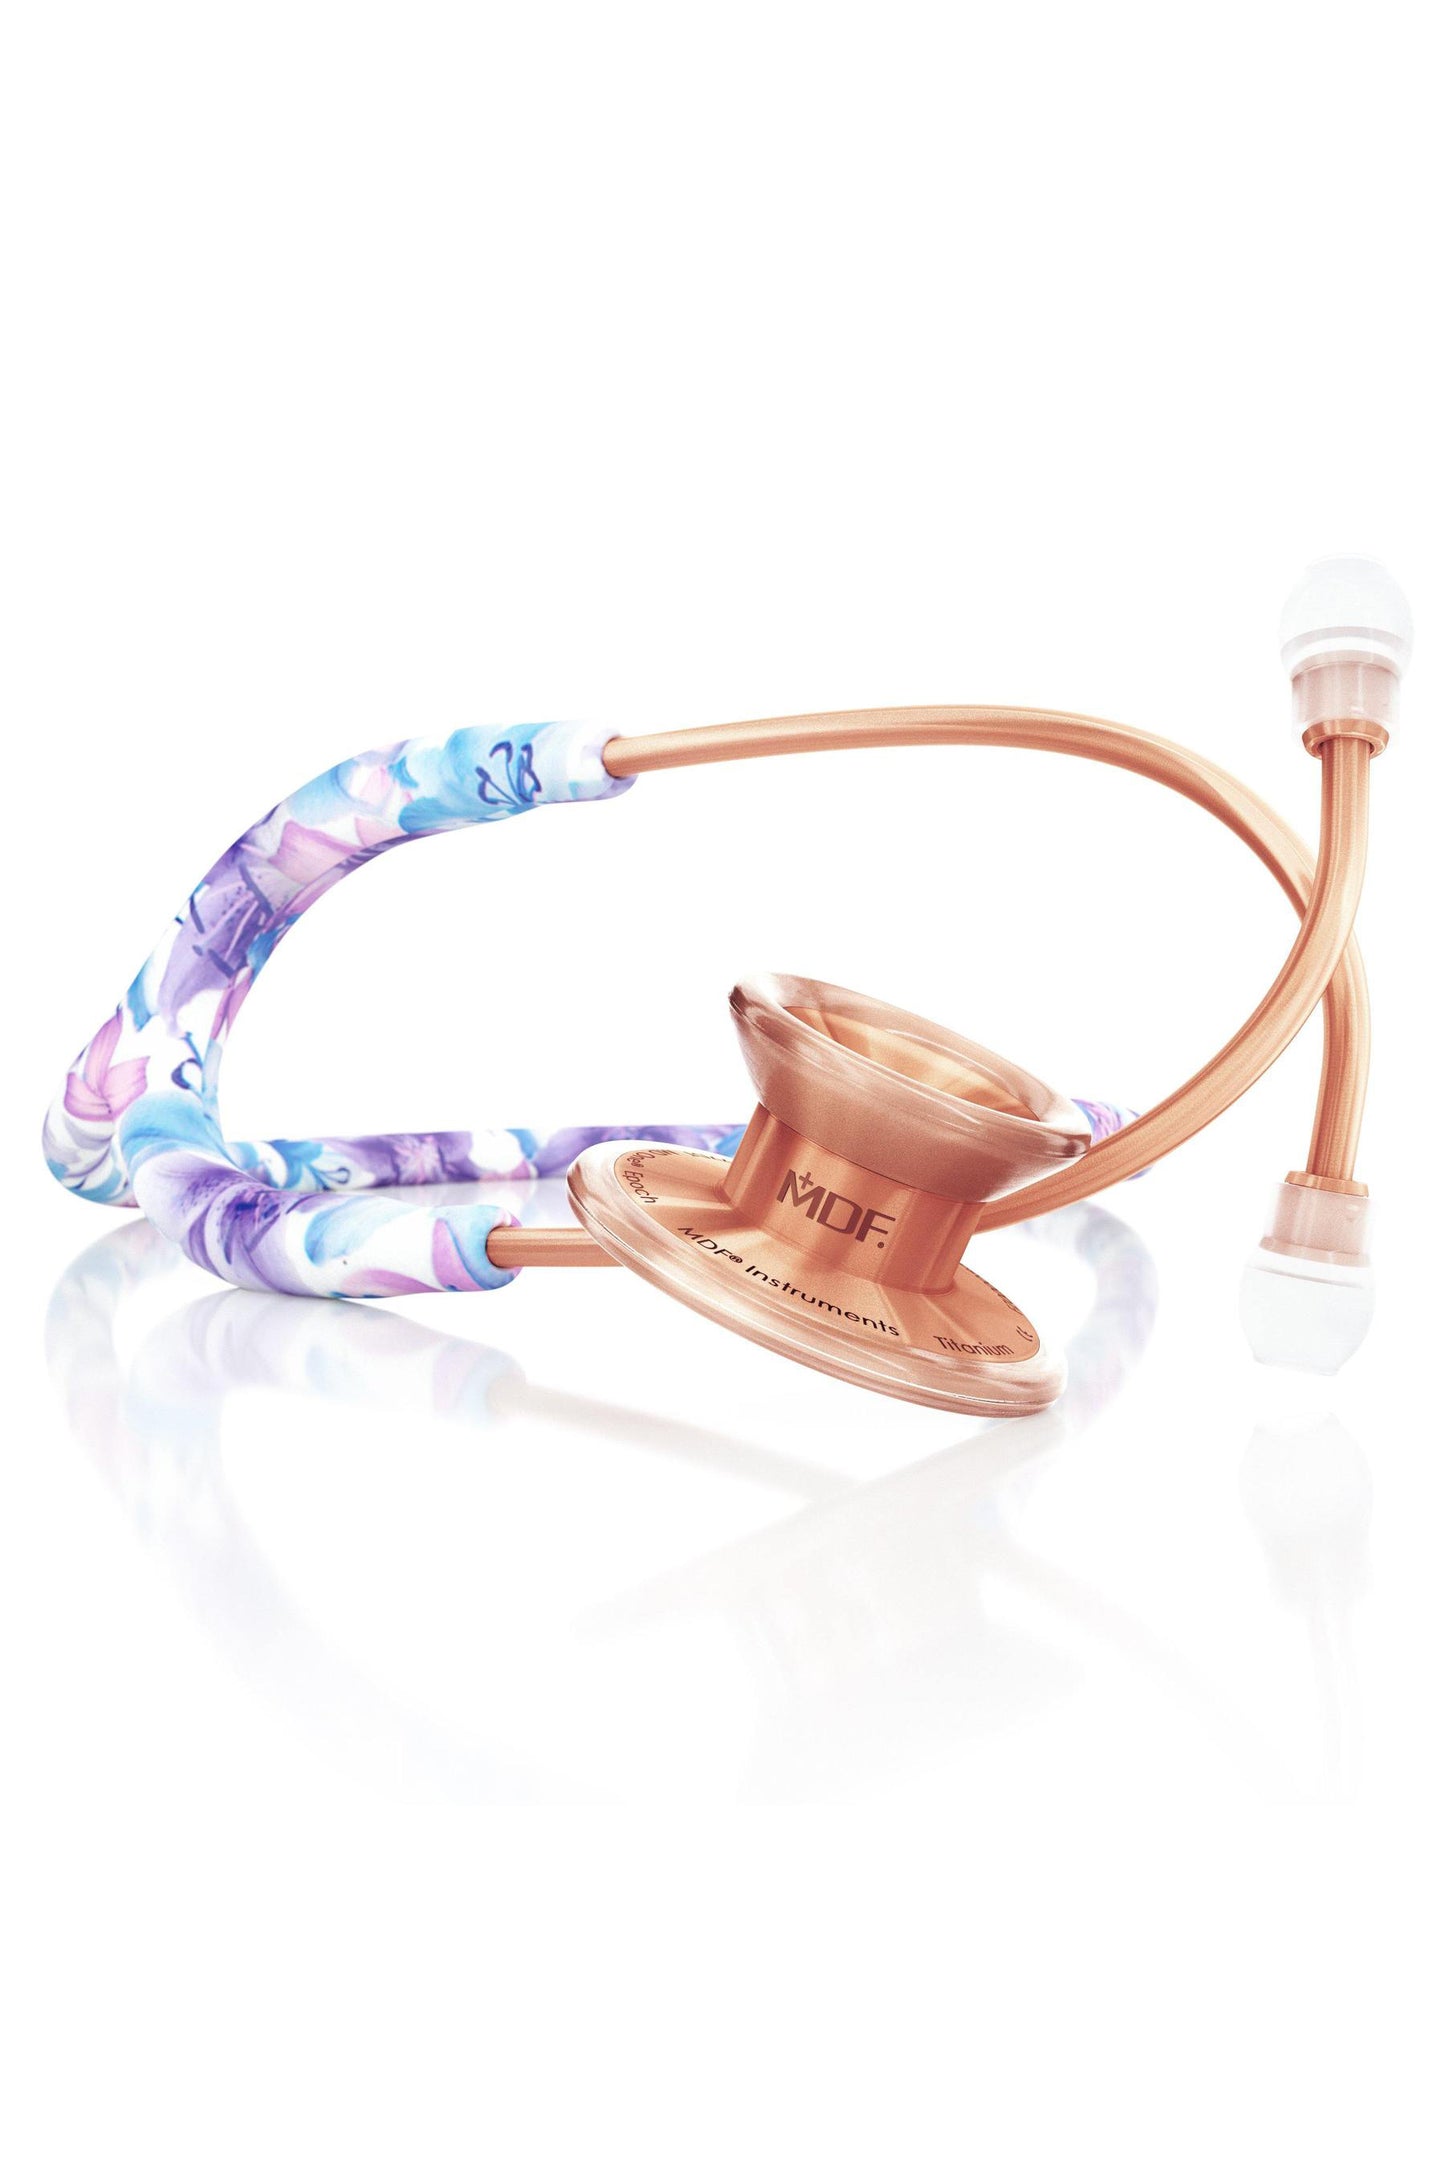 MD One® Epoch® Titanium Adult Stethoscope - Monet Rose Gold